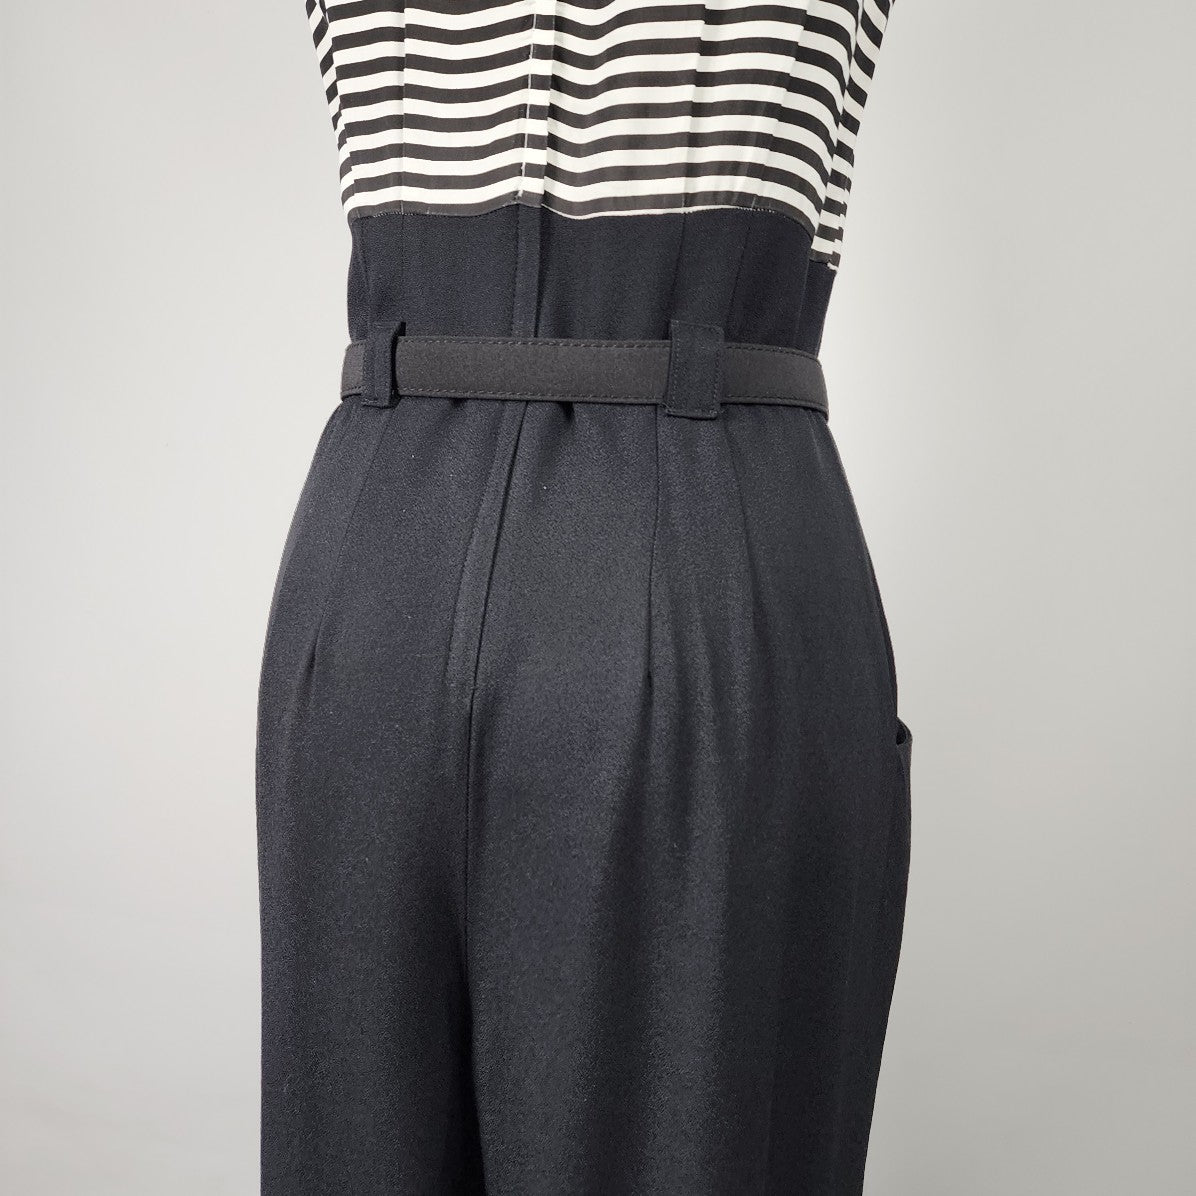 Vintage Black Striped Sleeveless Belted Jumpsuit Size M